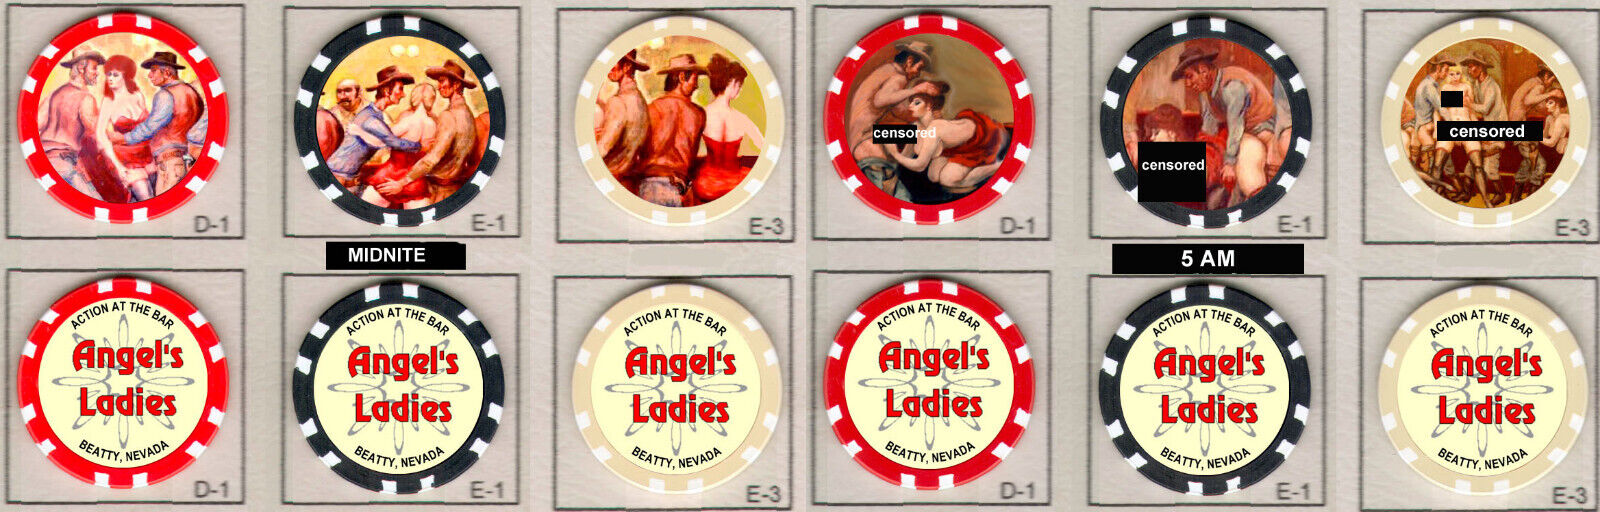 Angel's Ladies Beatty  NV  Legal Brothel  Action at the Bar Censored + postcard